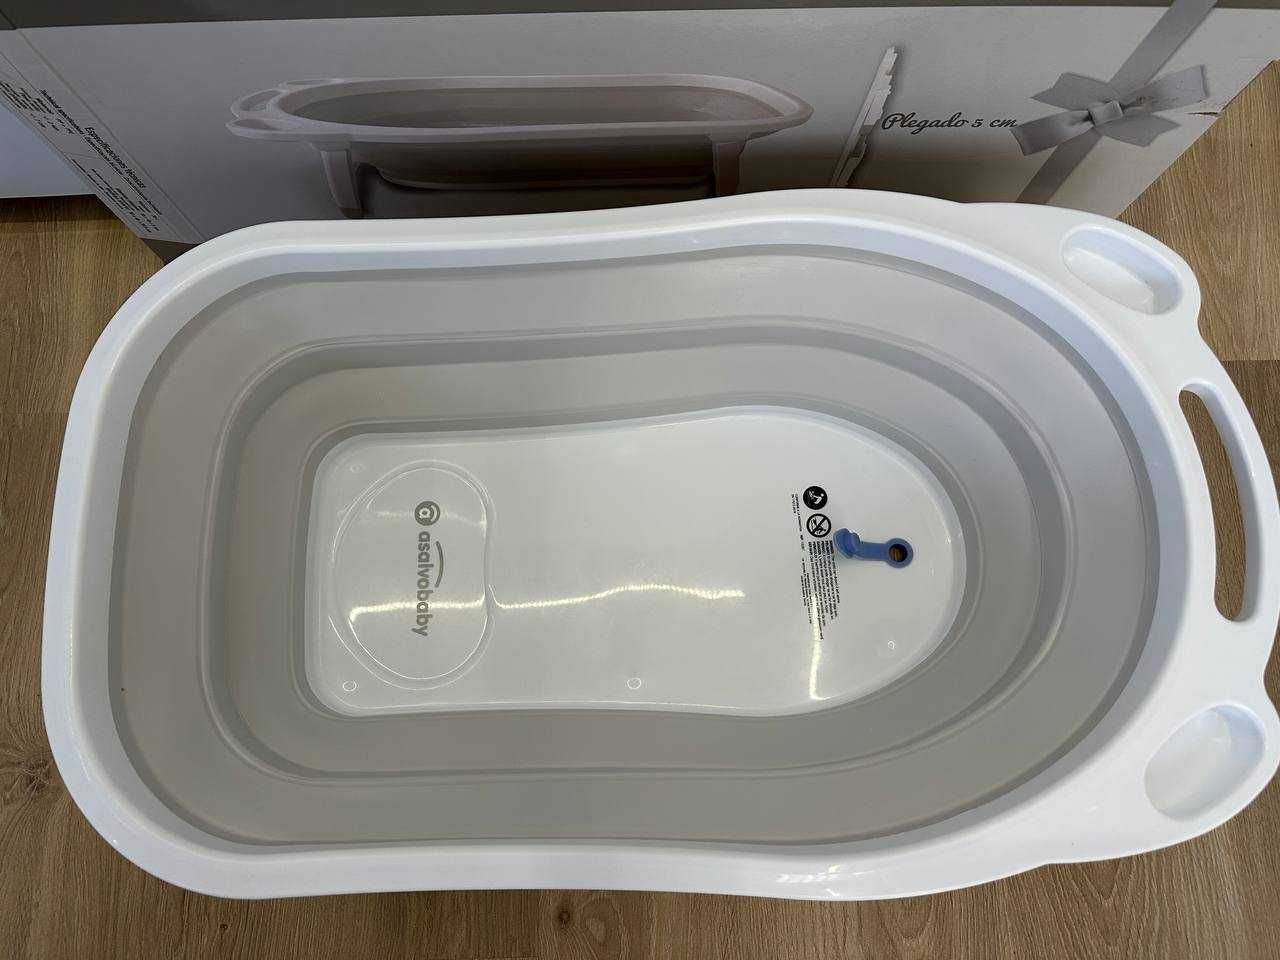 Ванночка ASALVO baby серый, силикон, складная